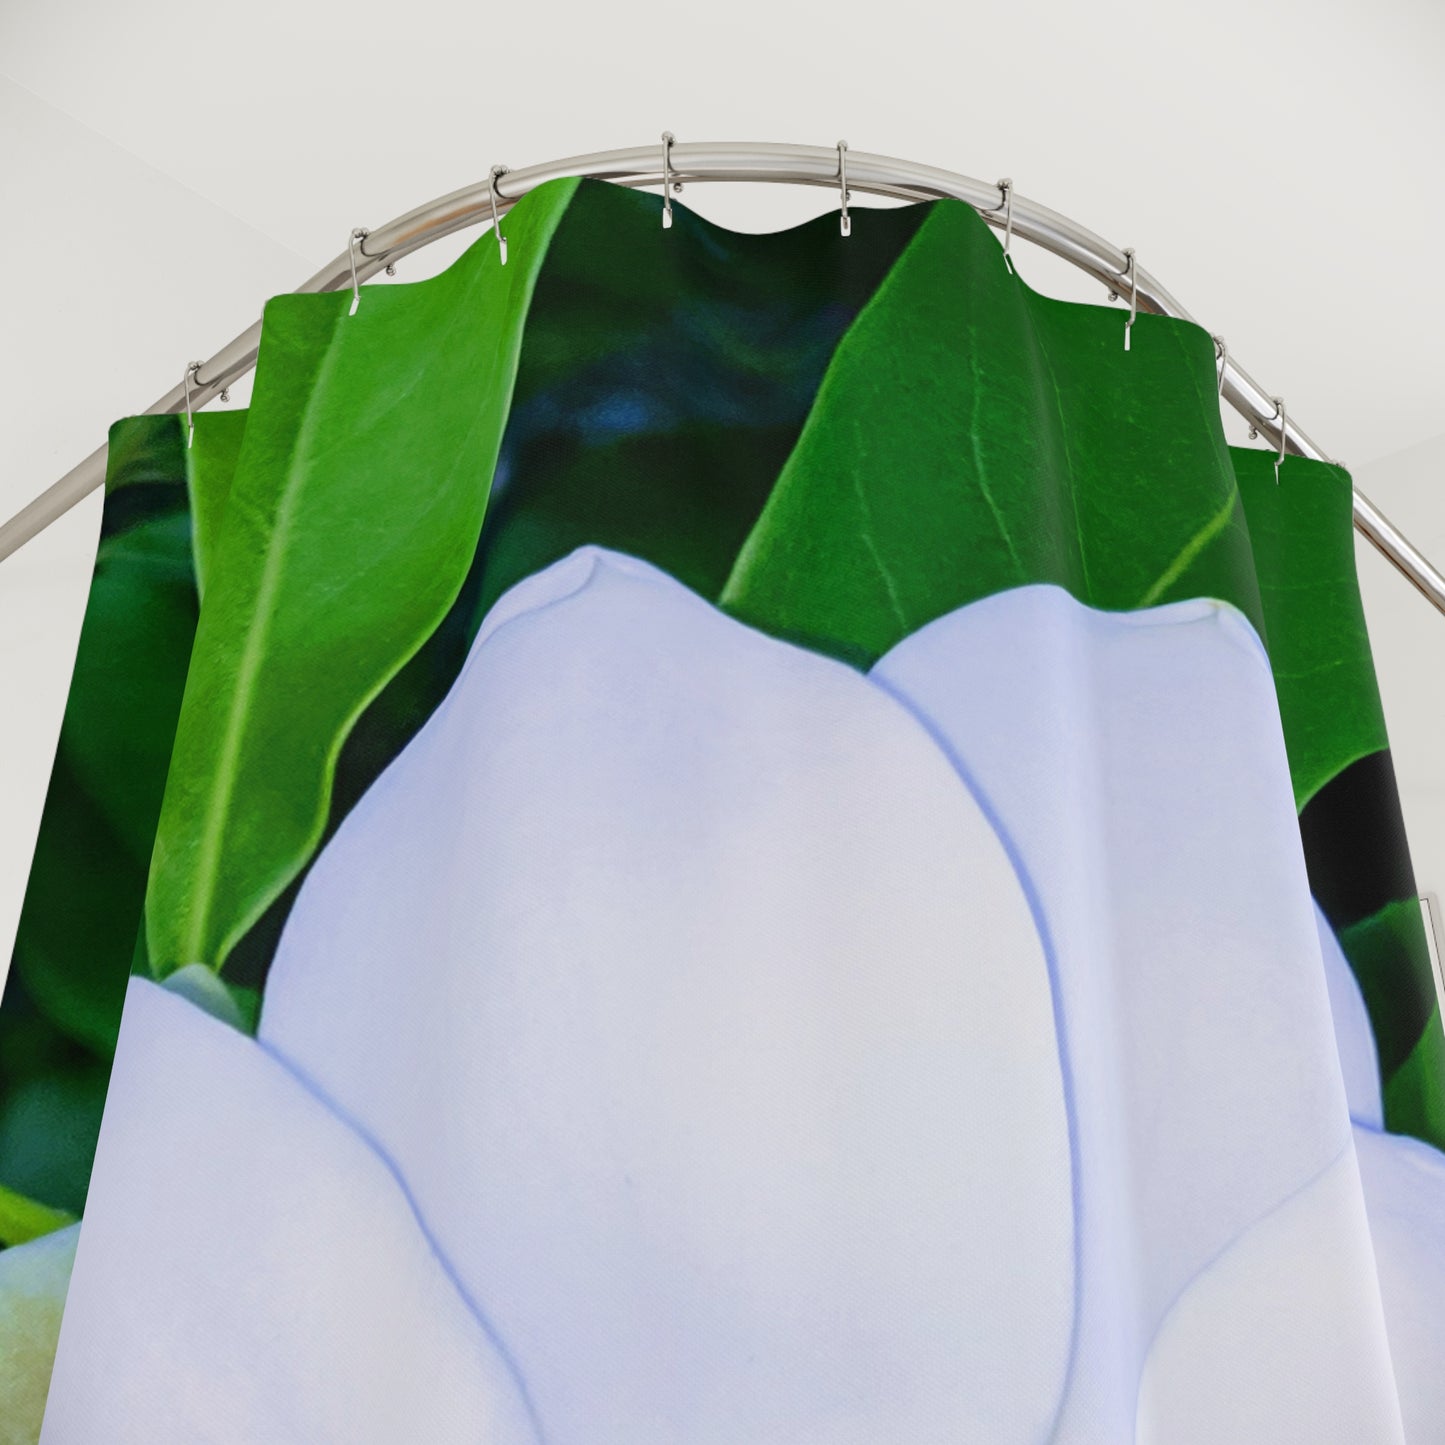 SSSS White Magnolia Shower Curtain